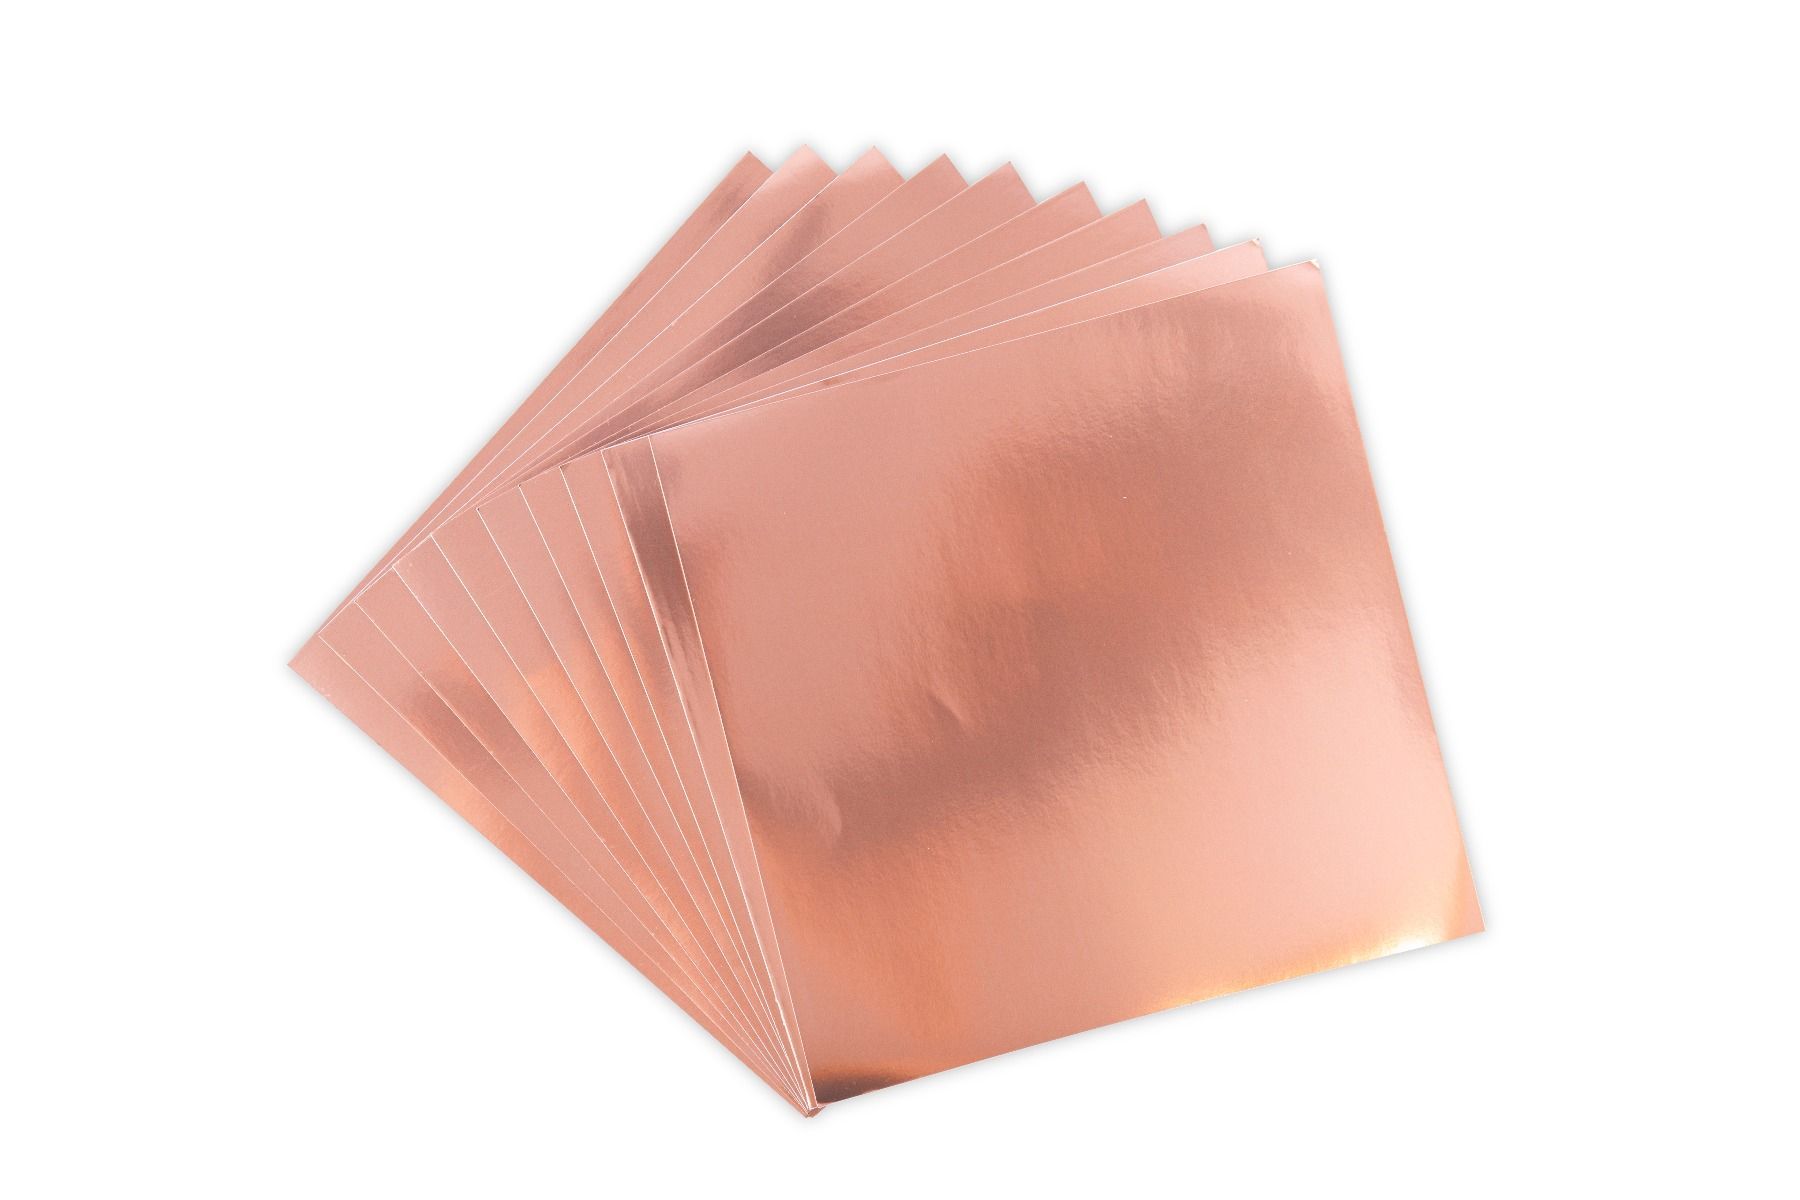 Sizzix • Surfacez Aluminium Metal Sheets 6" x 6" Rose Gold 10PK